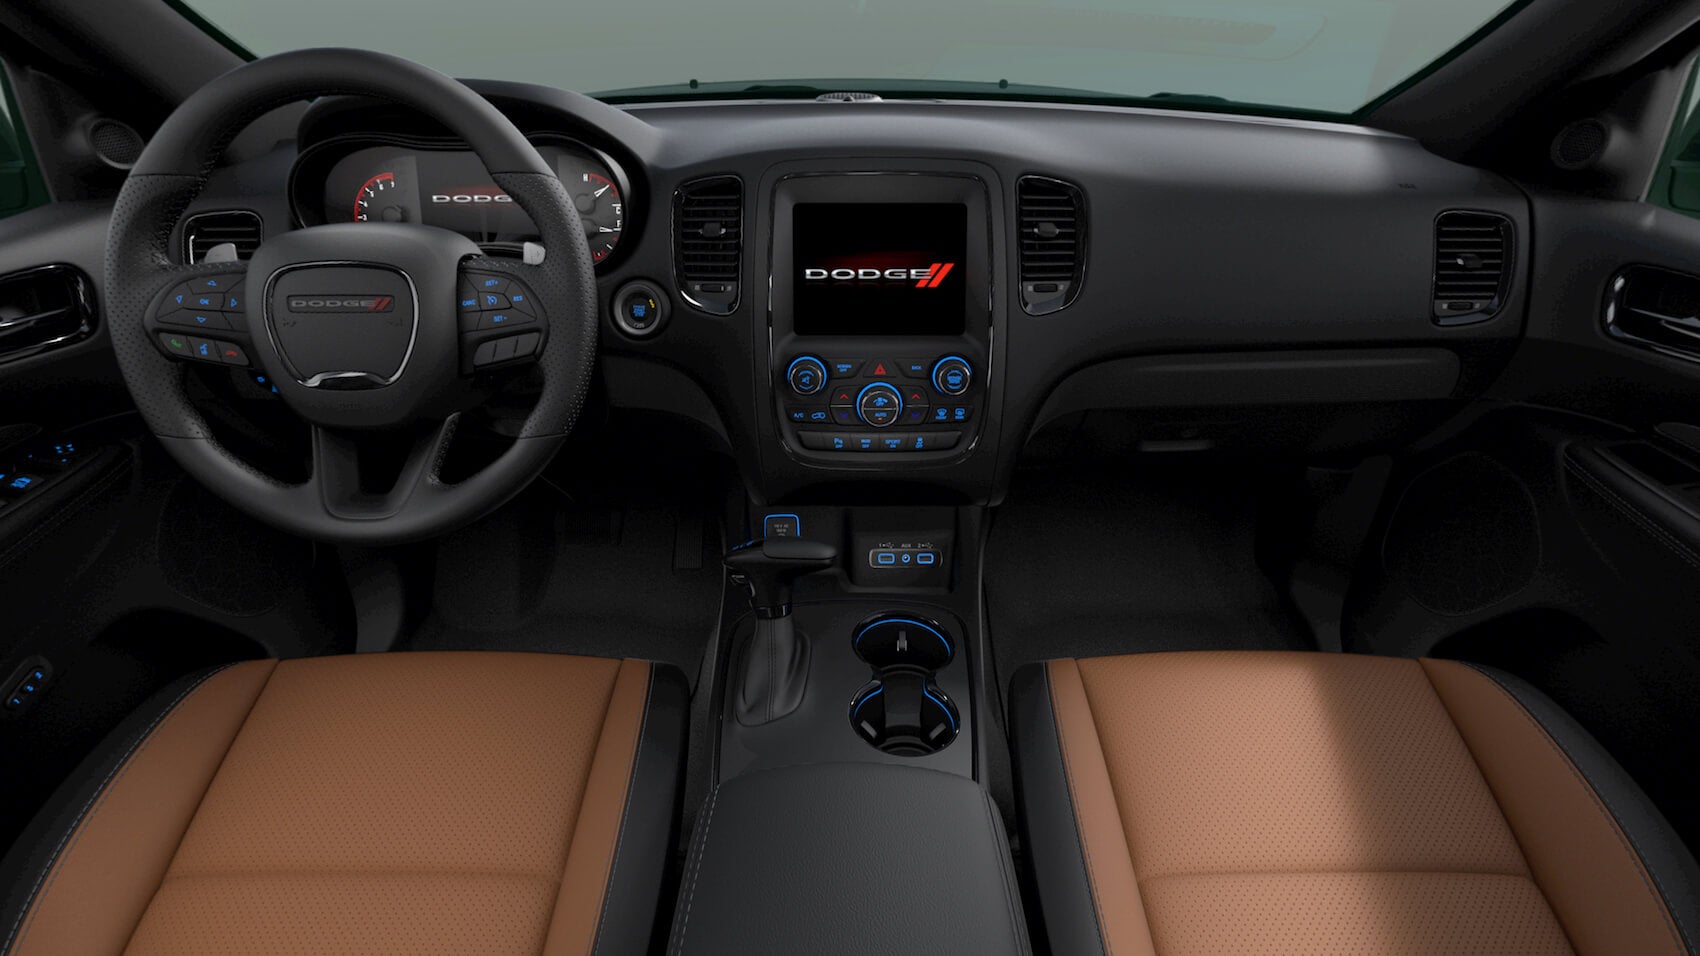 Dodge Durango technology features